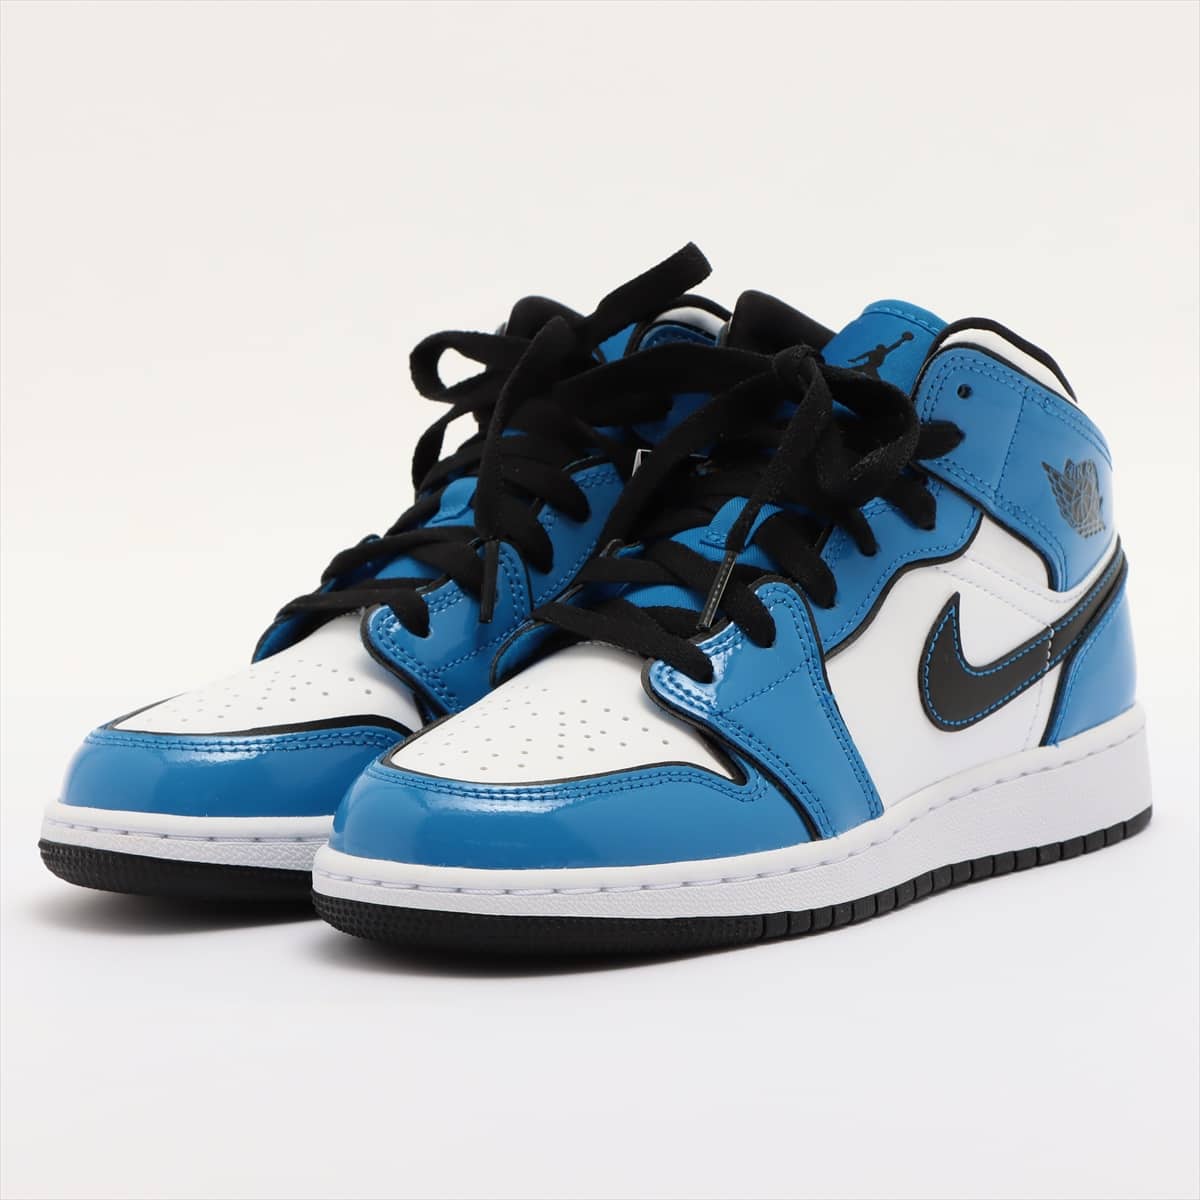 Nike AIR JORDAN 1 Patent leather High-top Sneakers 23㎝ Kids Blue MID SE BQ6931-402